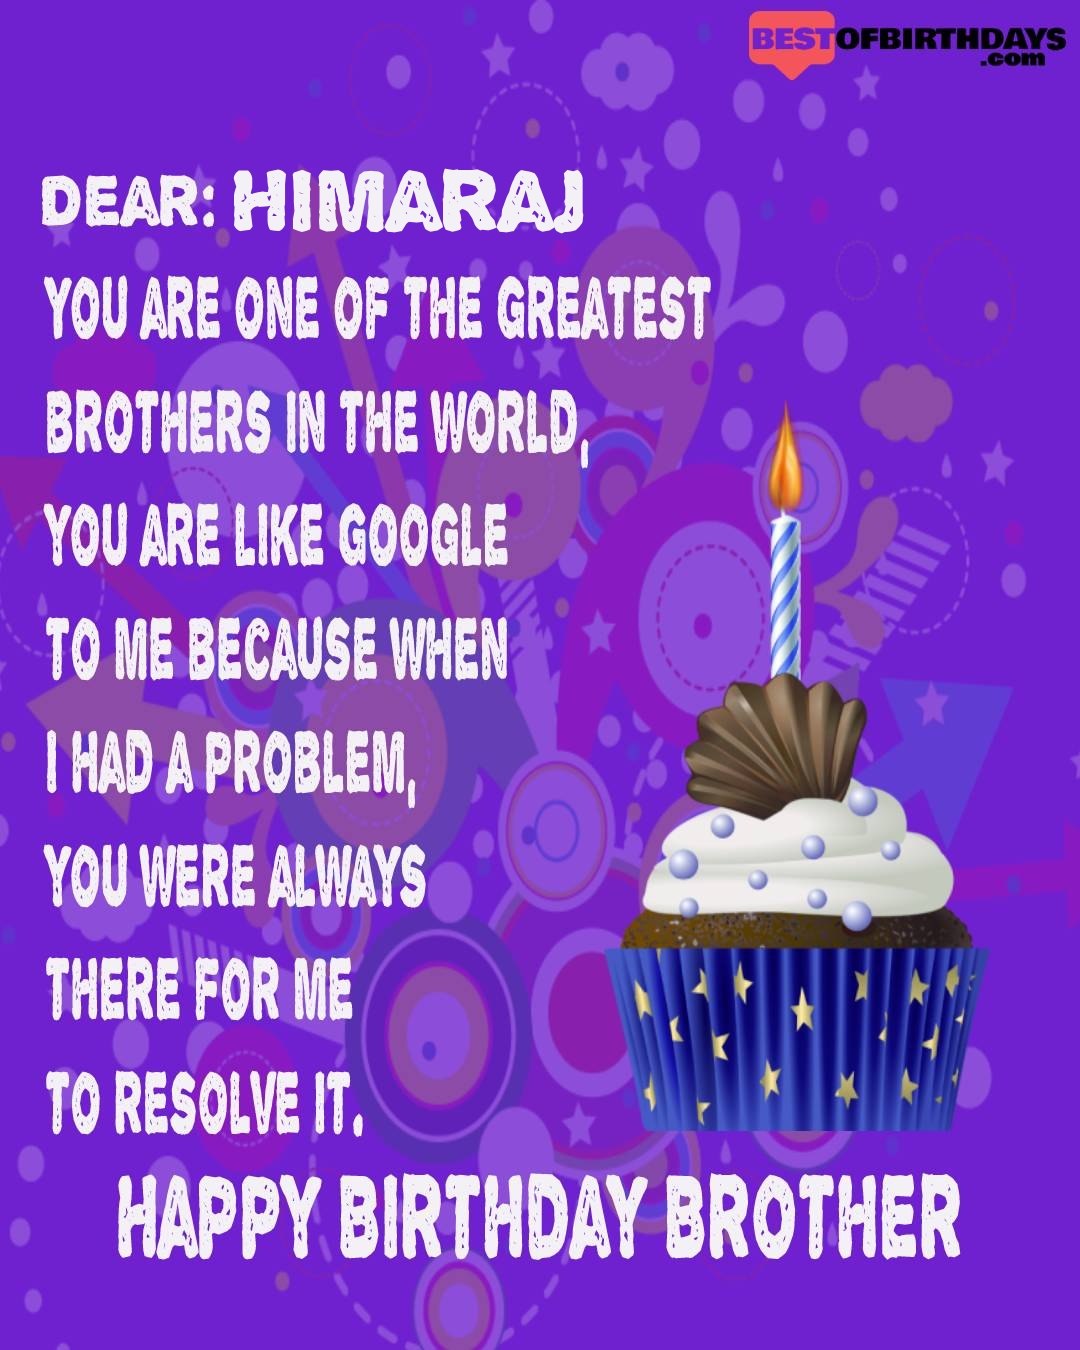 Happy birthday himaraj bhai brother bro